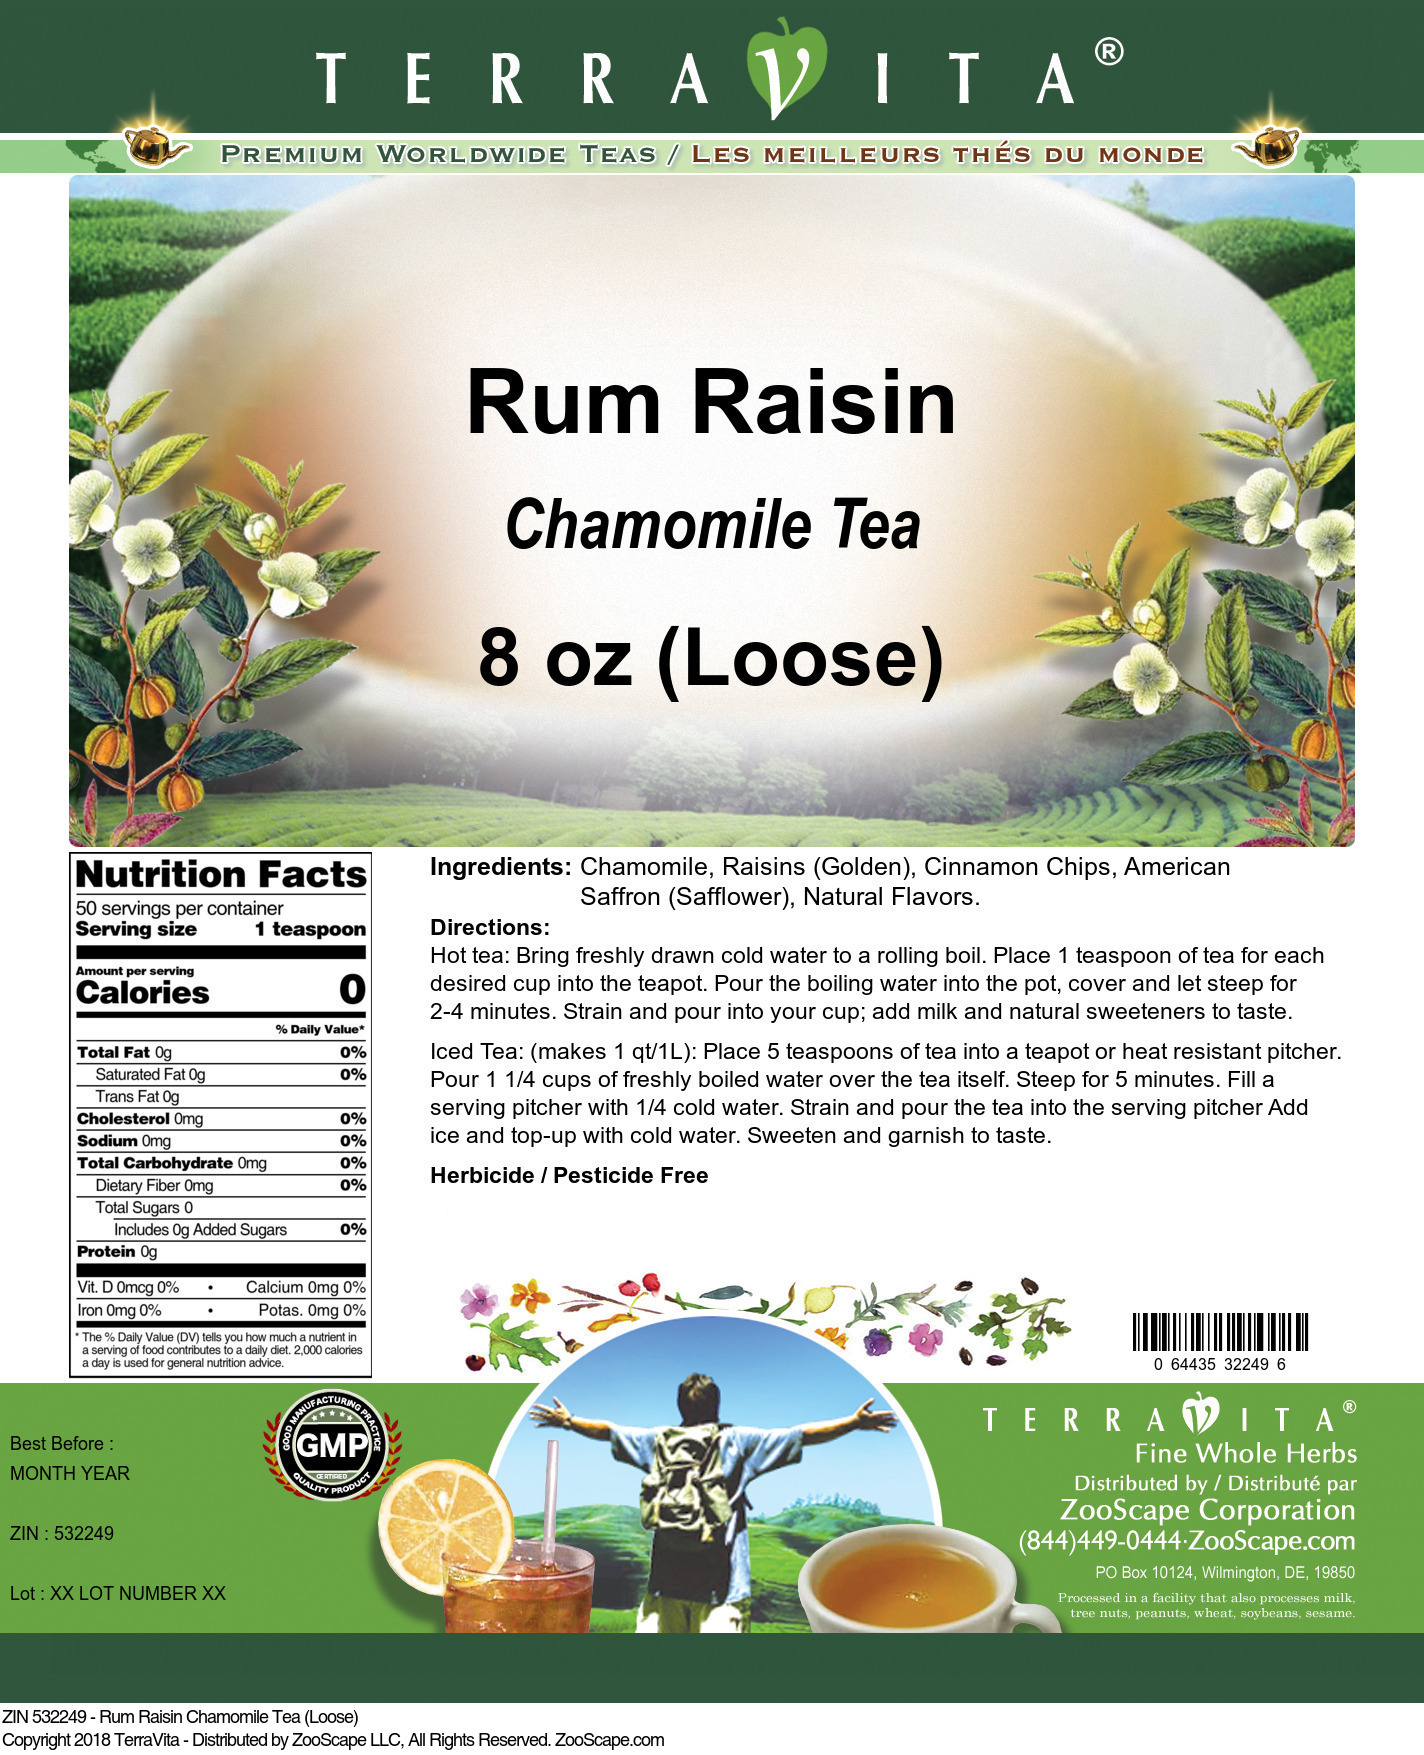 Rum Raisin Chamomile Tea (Loose) - Label